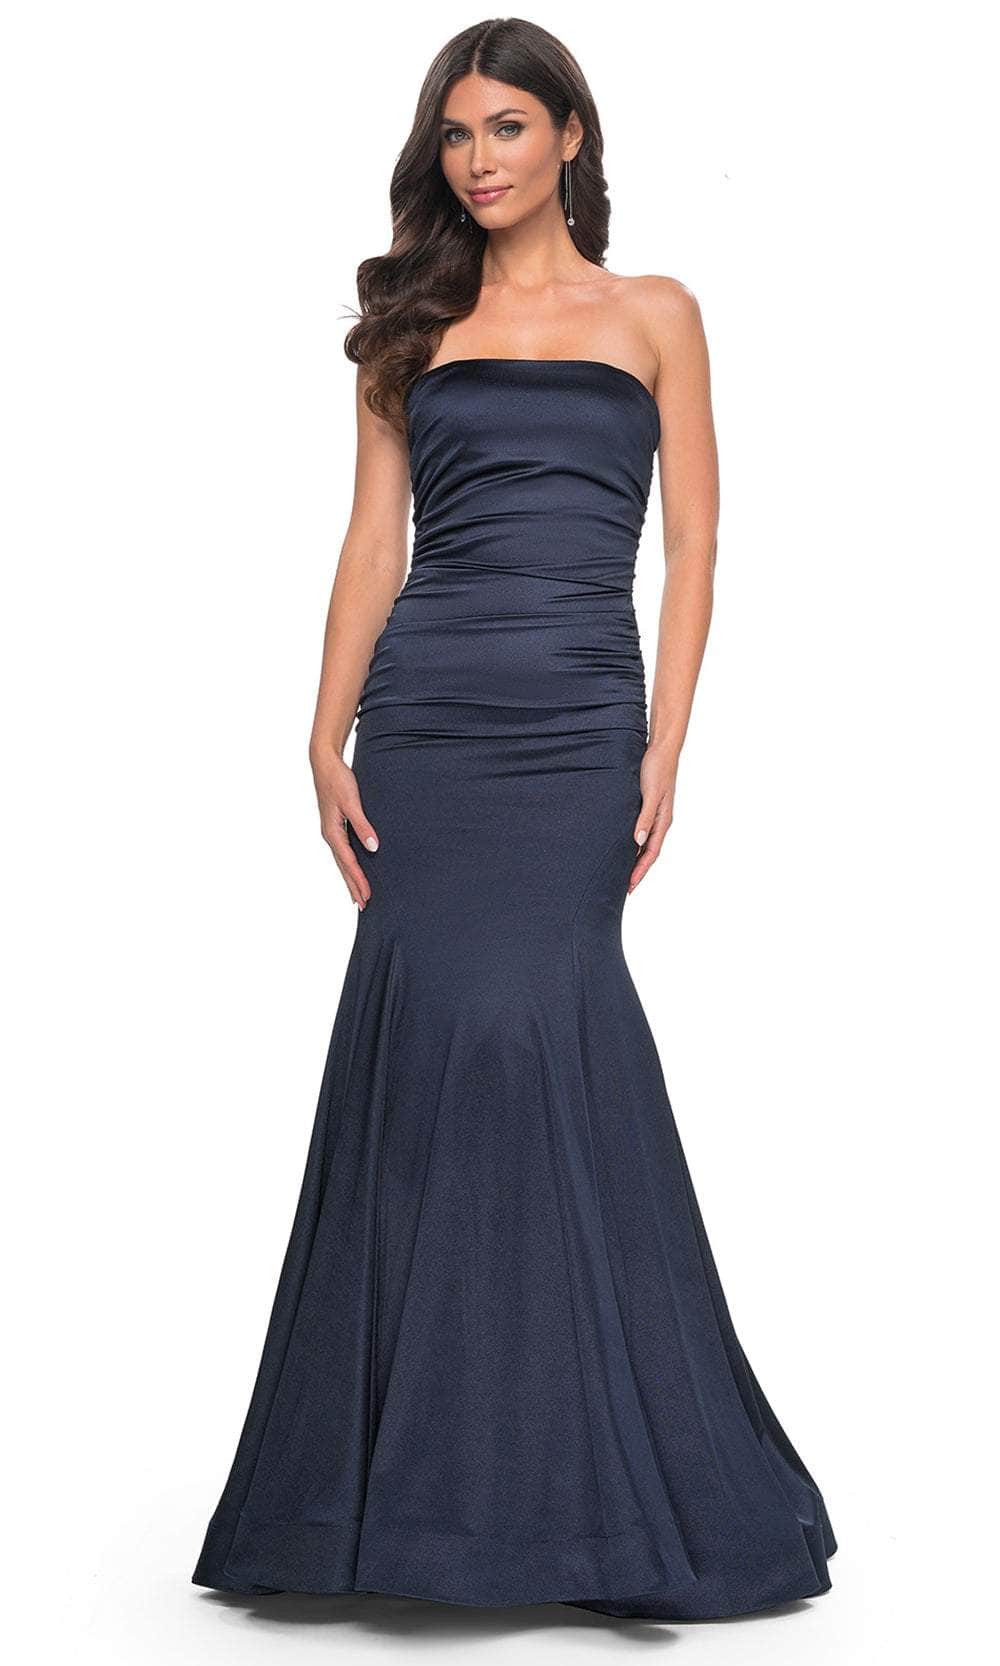 La Femme 31980 - Strapless Satin Prom Dress
